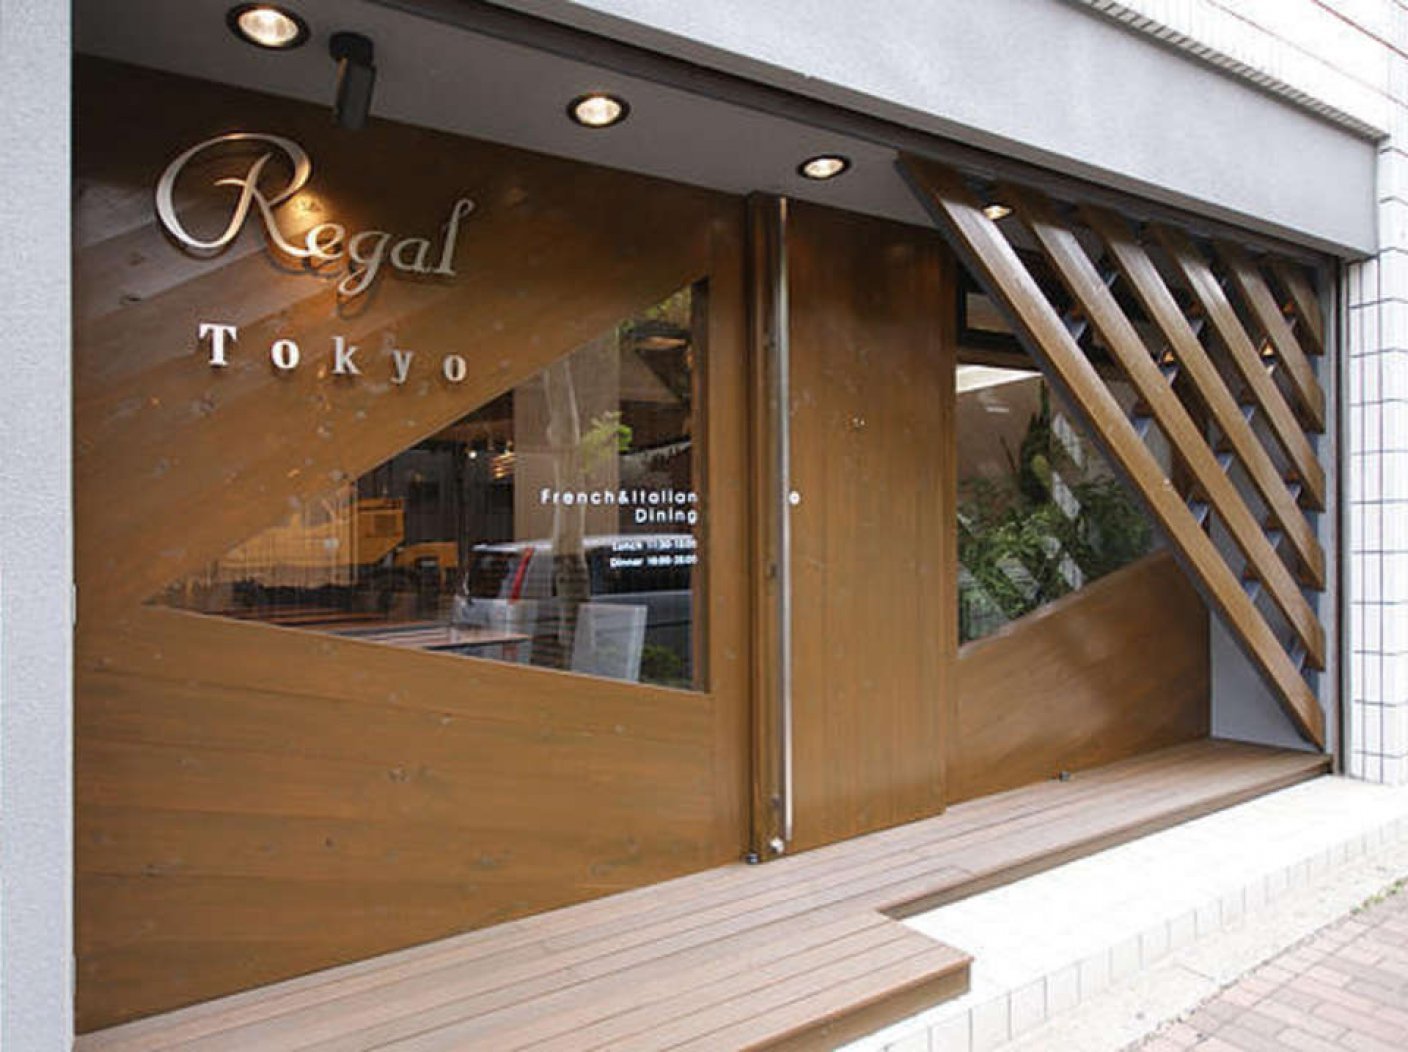 Regal Tokyoの写真 1